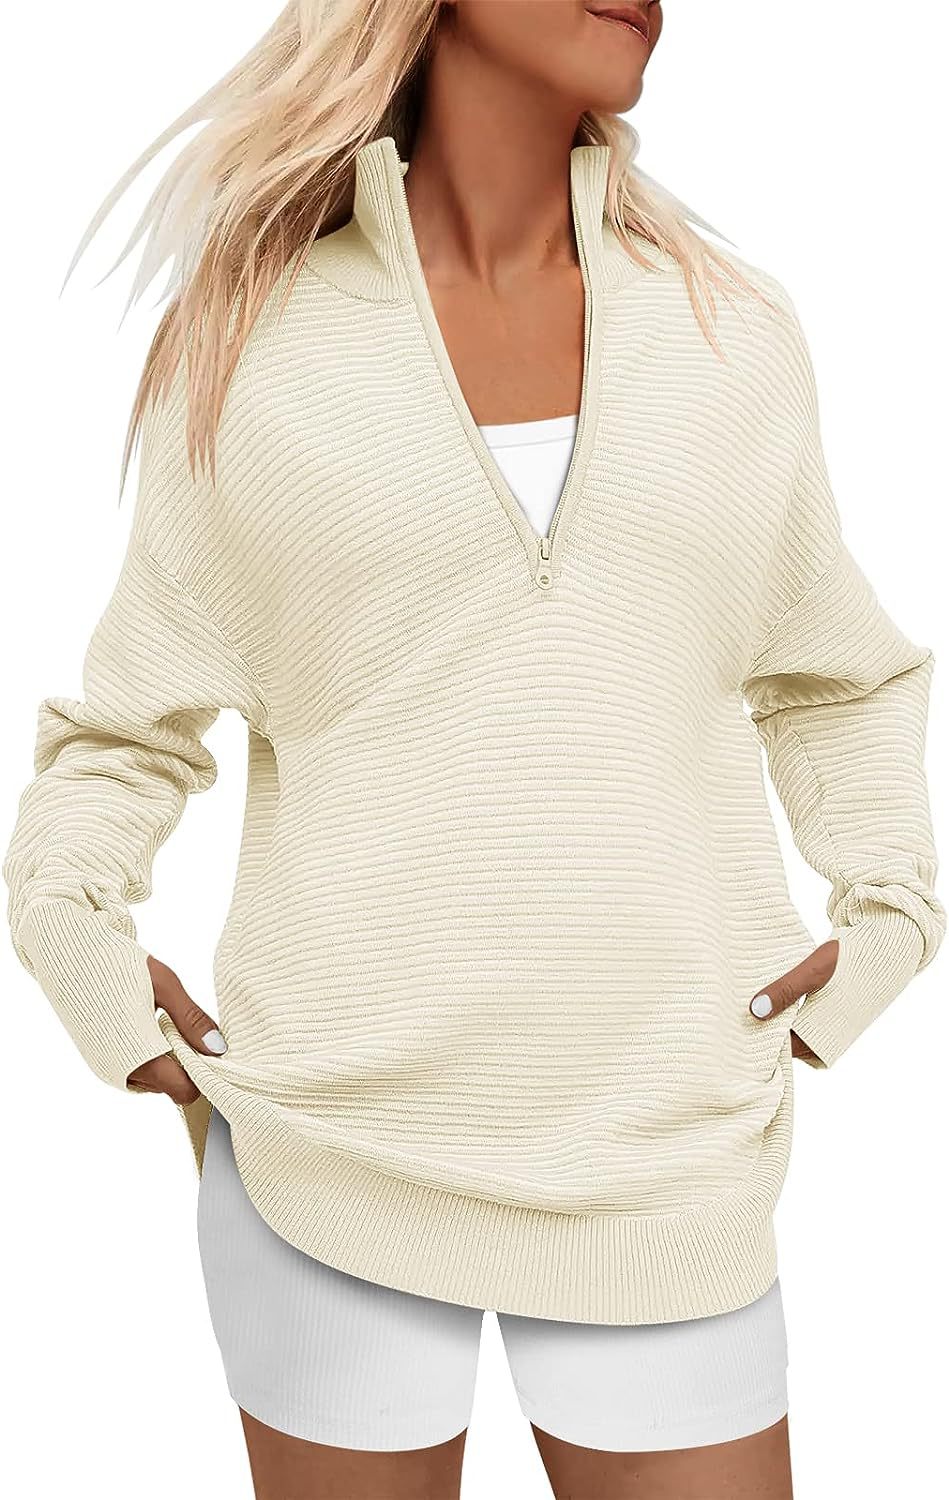 Women's Sleeve Half Zip Casual Rib Knitted Sweaters